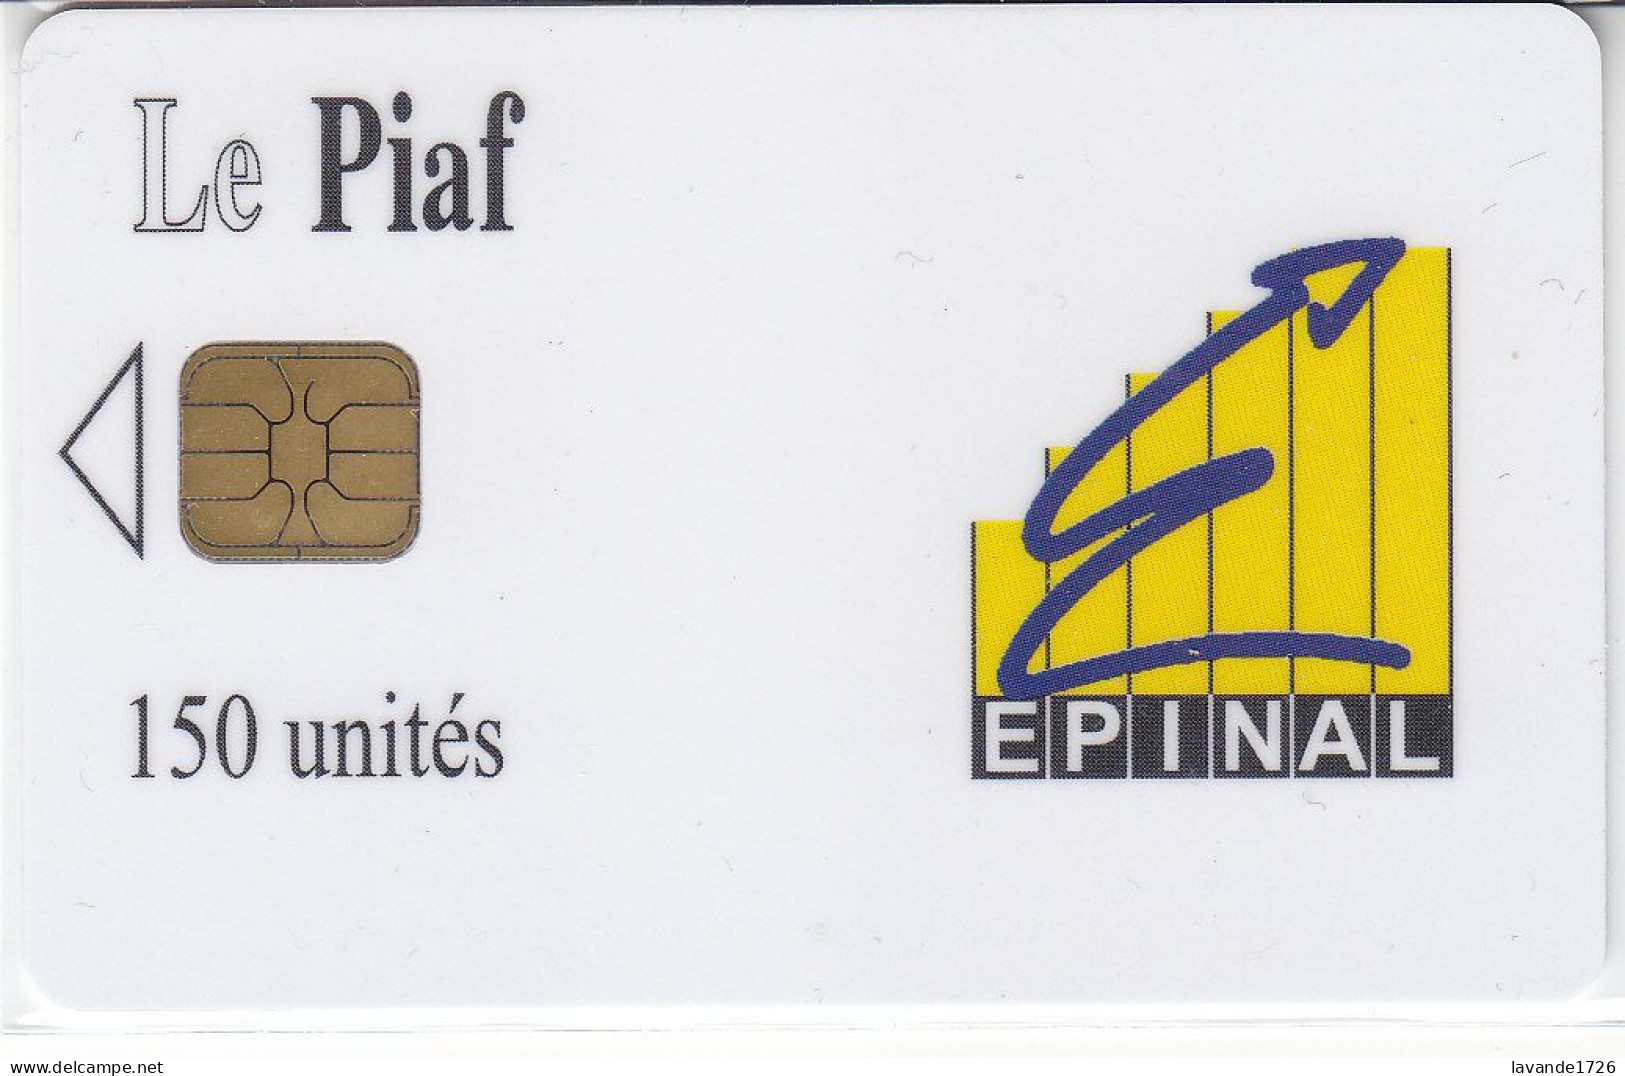 PIAF De EPINAL 150 Unites Date 06.2004      500ex - Parkkarten